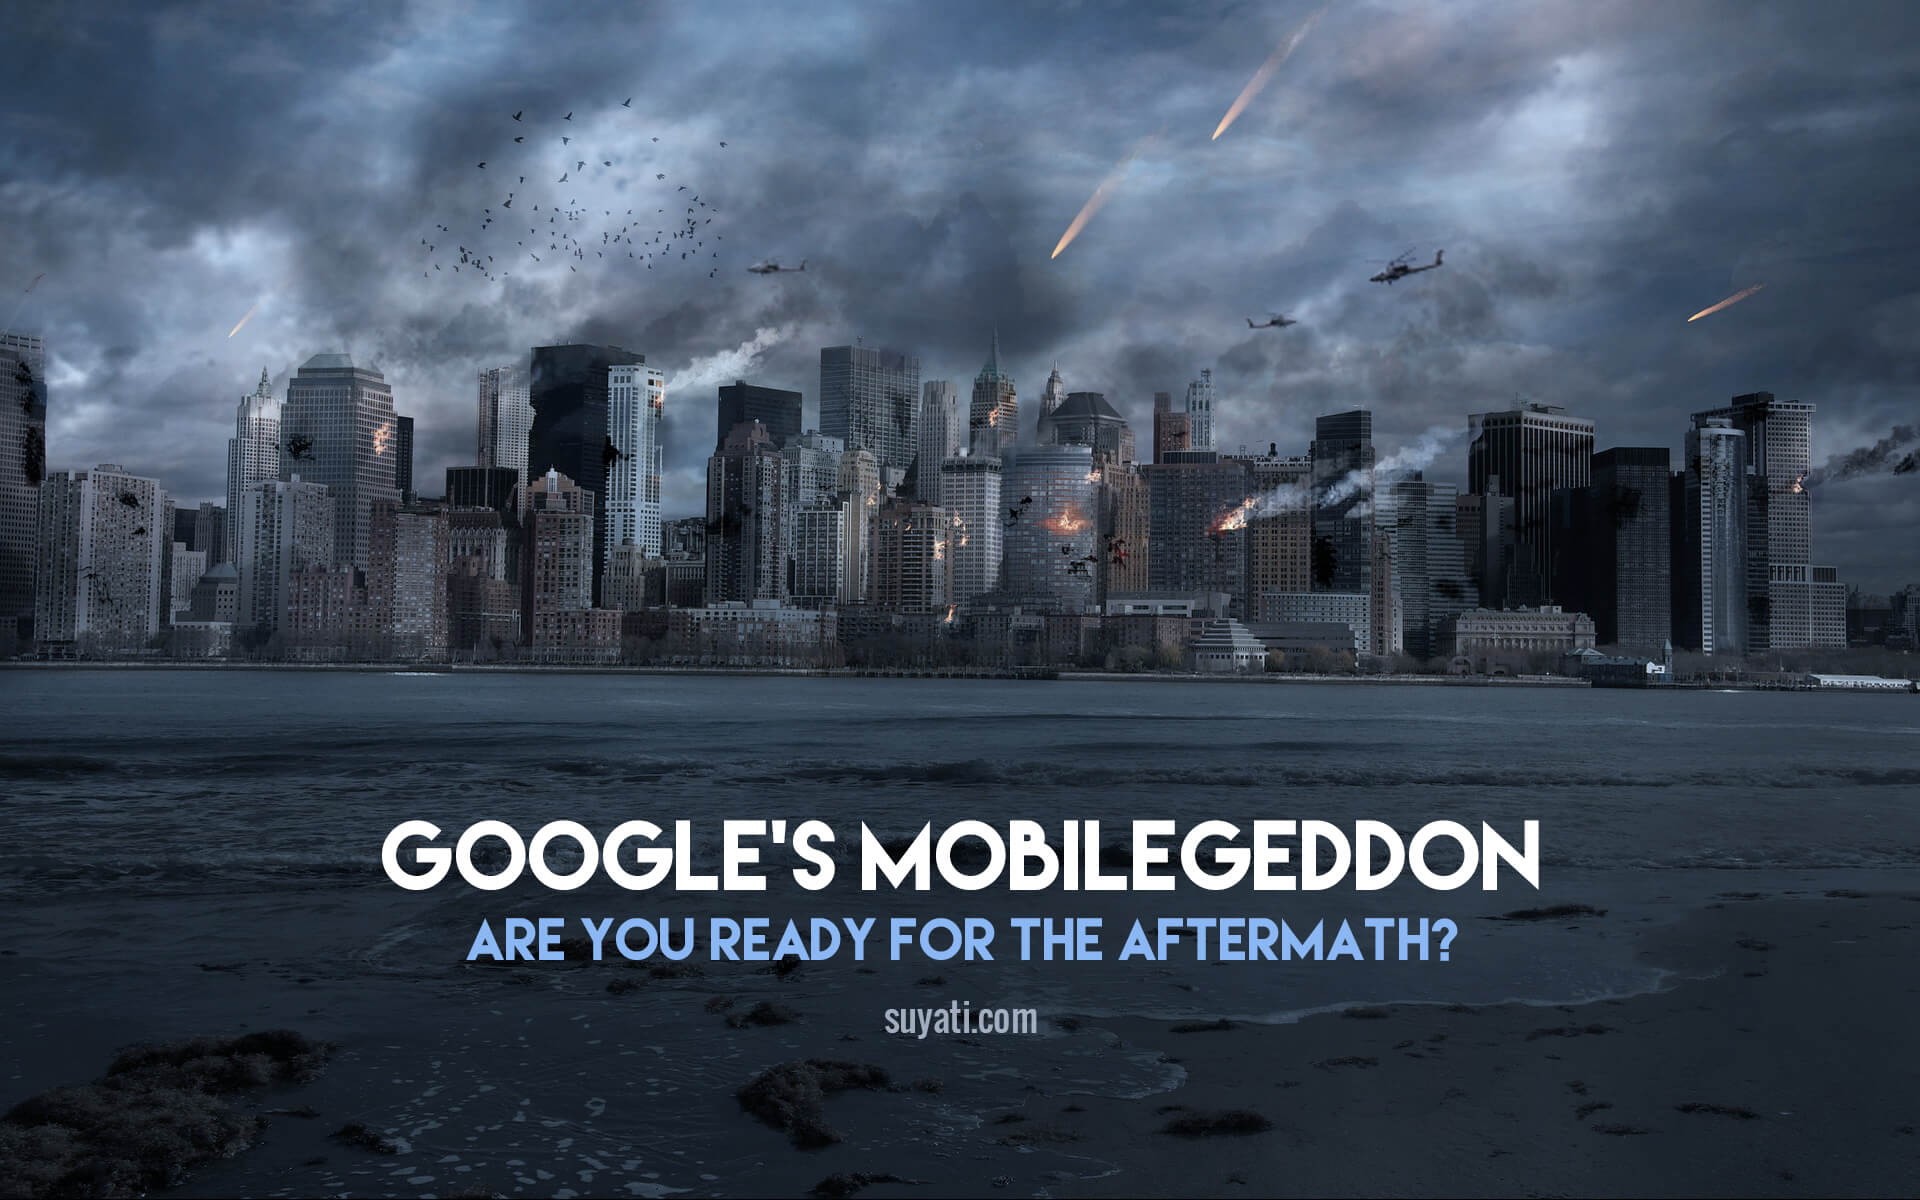 Google’s Mobilegeddon